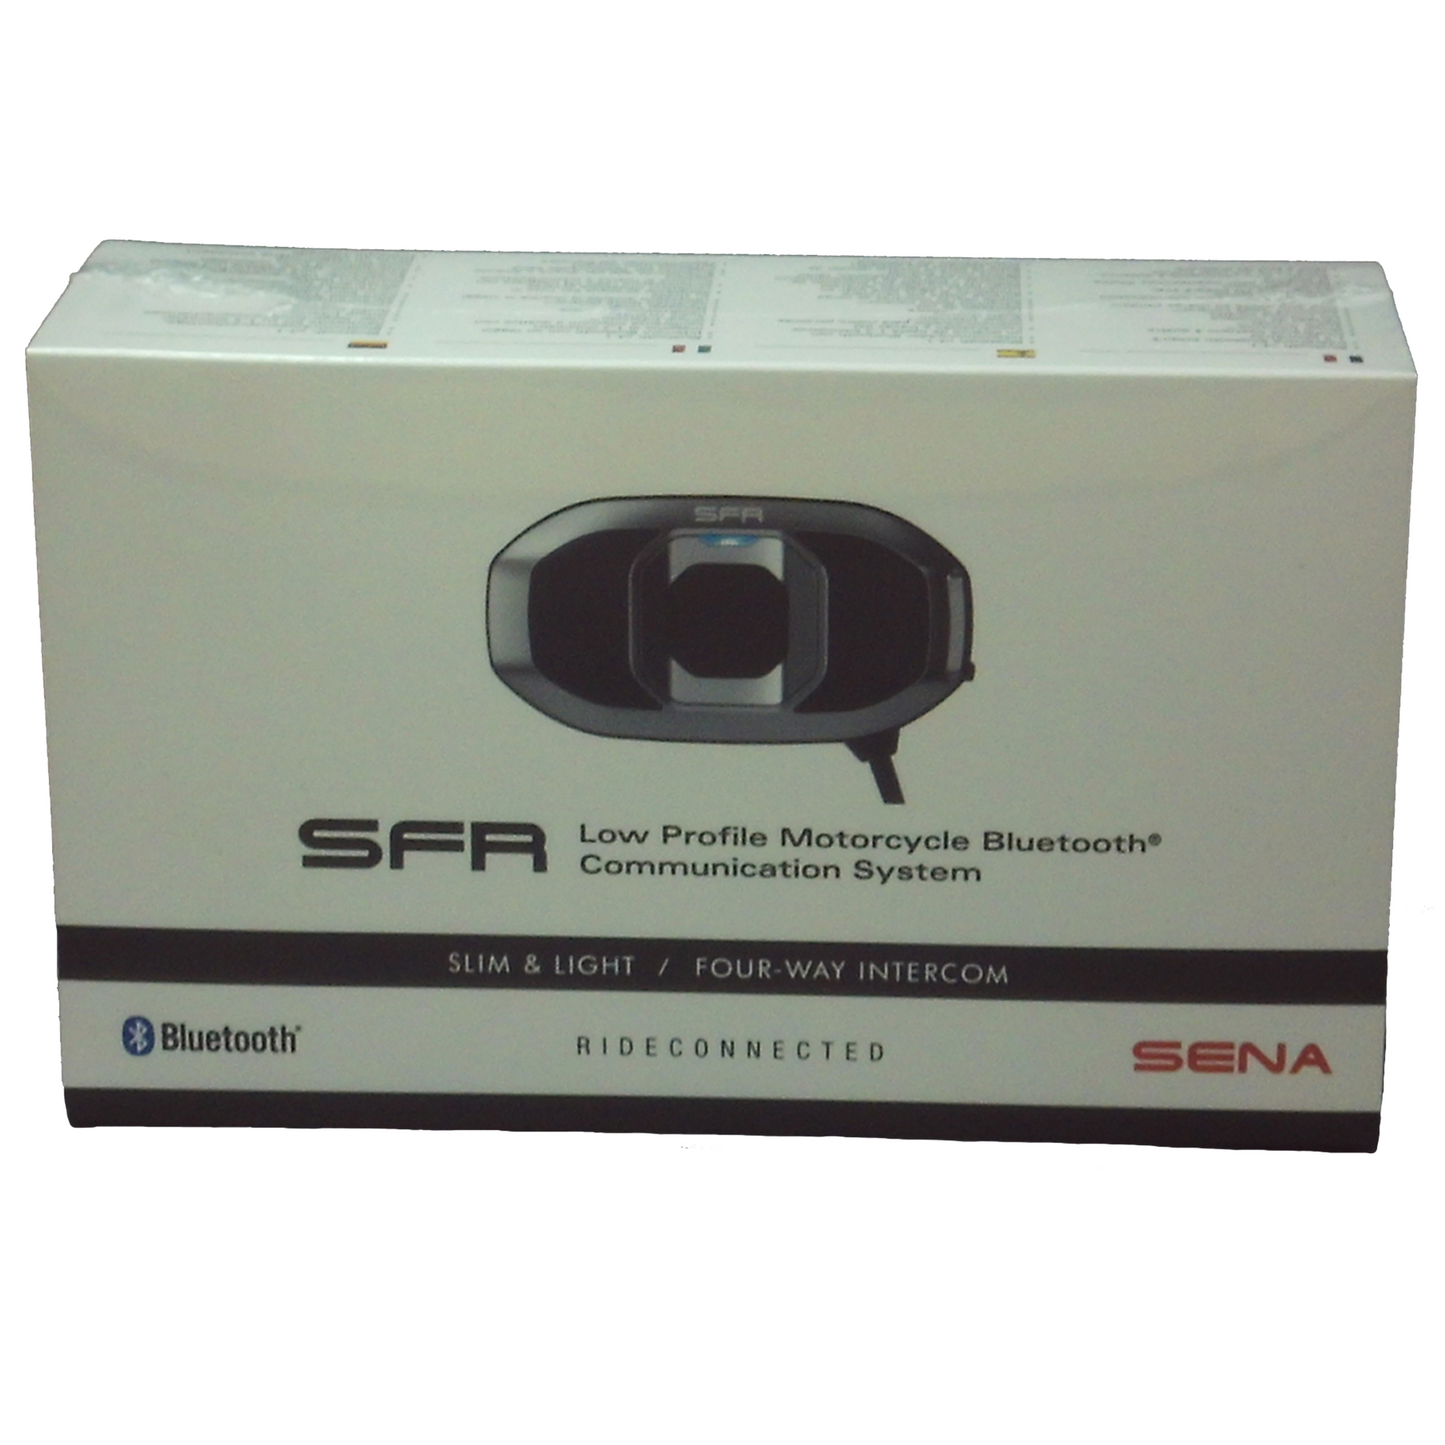 Sena SFR-01 Low Profile Motorcycle Bluetooth Comm System